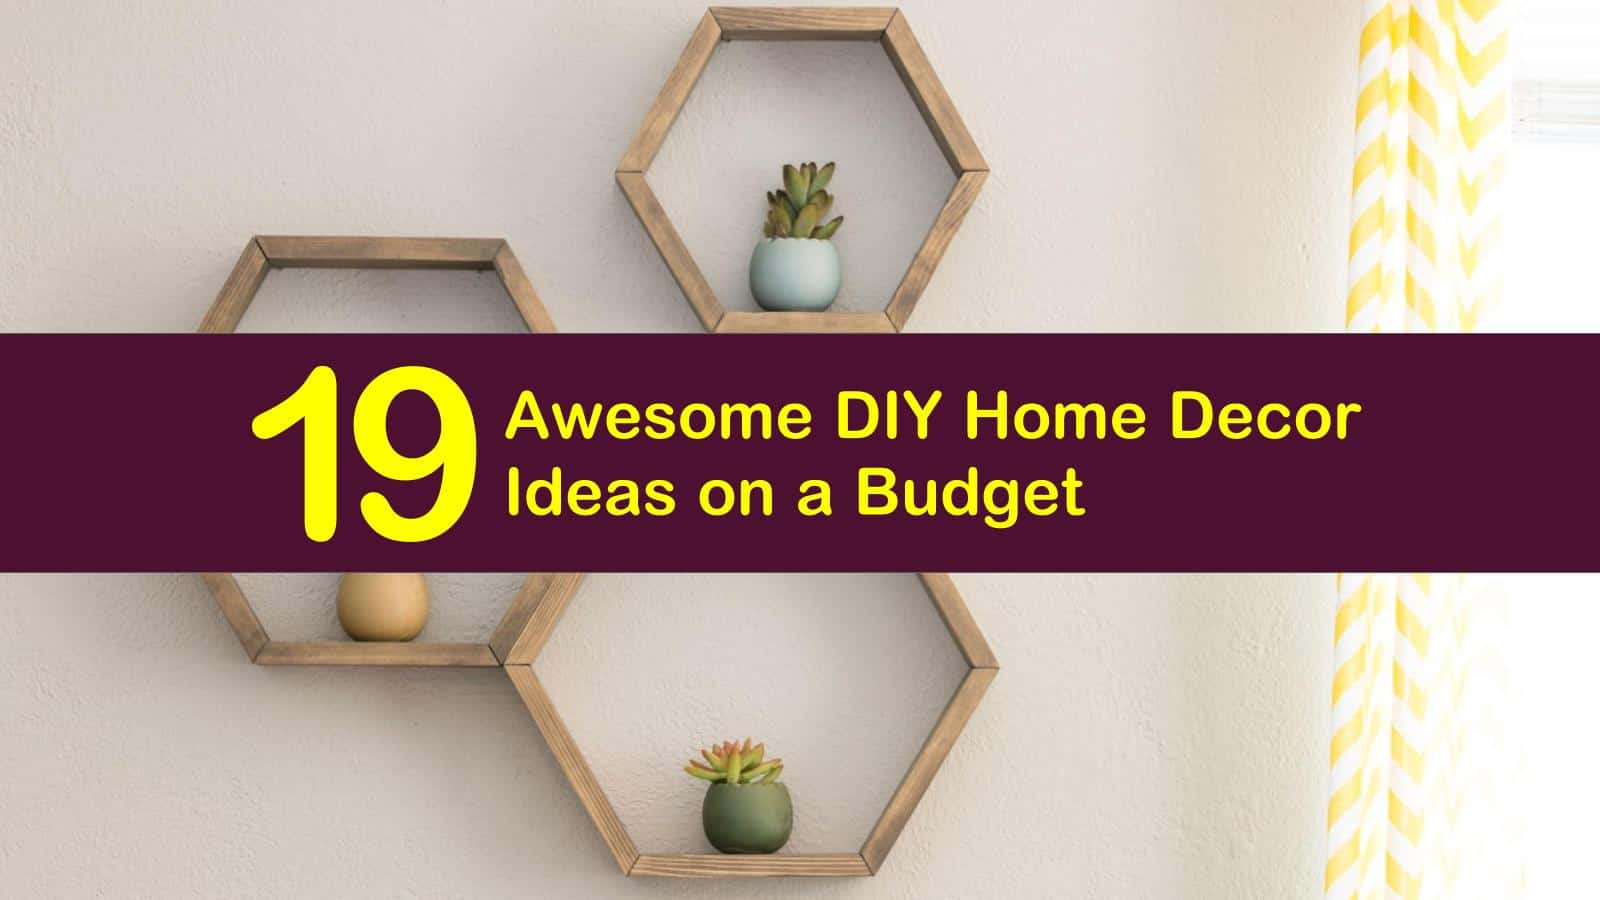 19 Awesome DIY Home Decor Ideas on a Budget